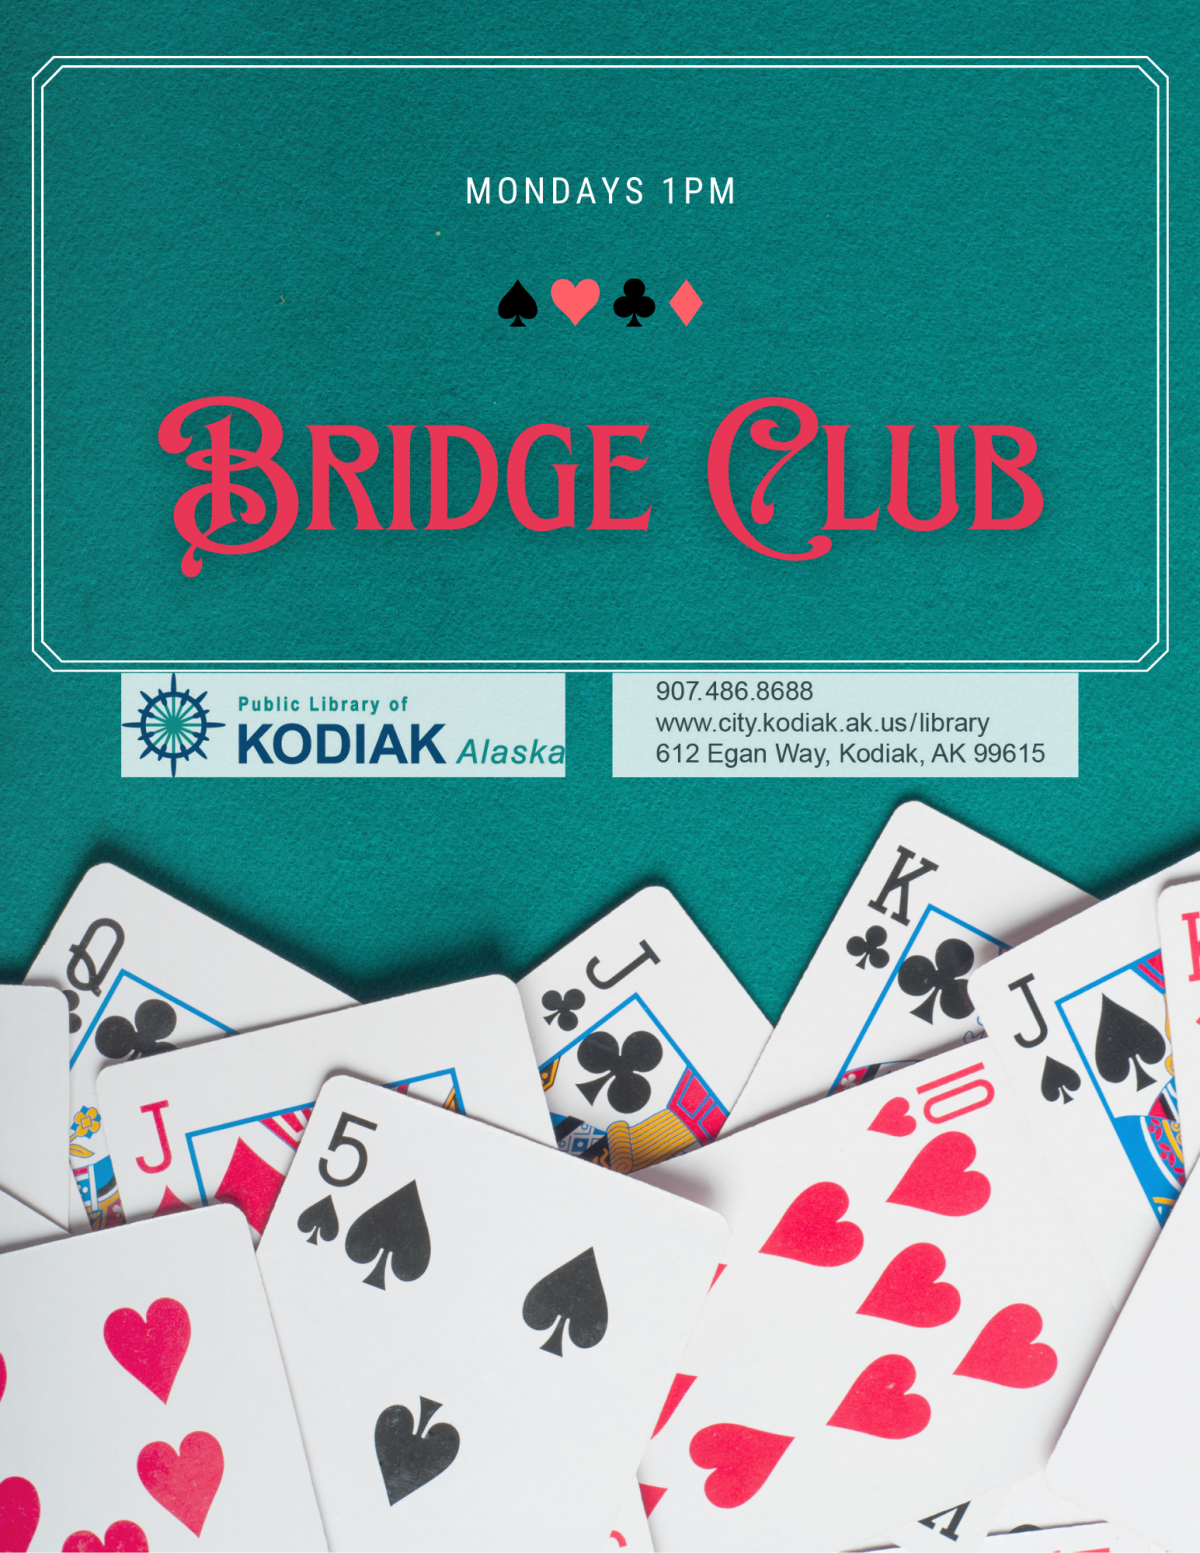 Bridge Club